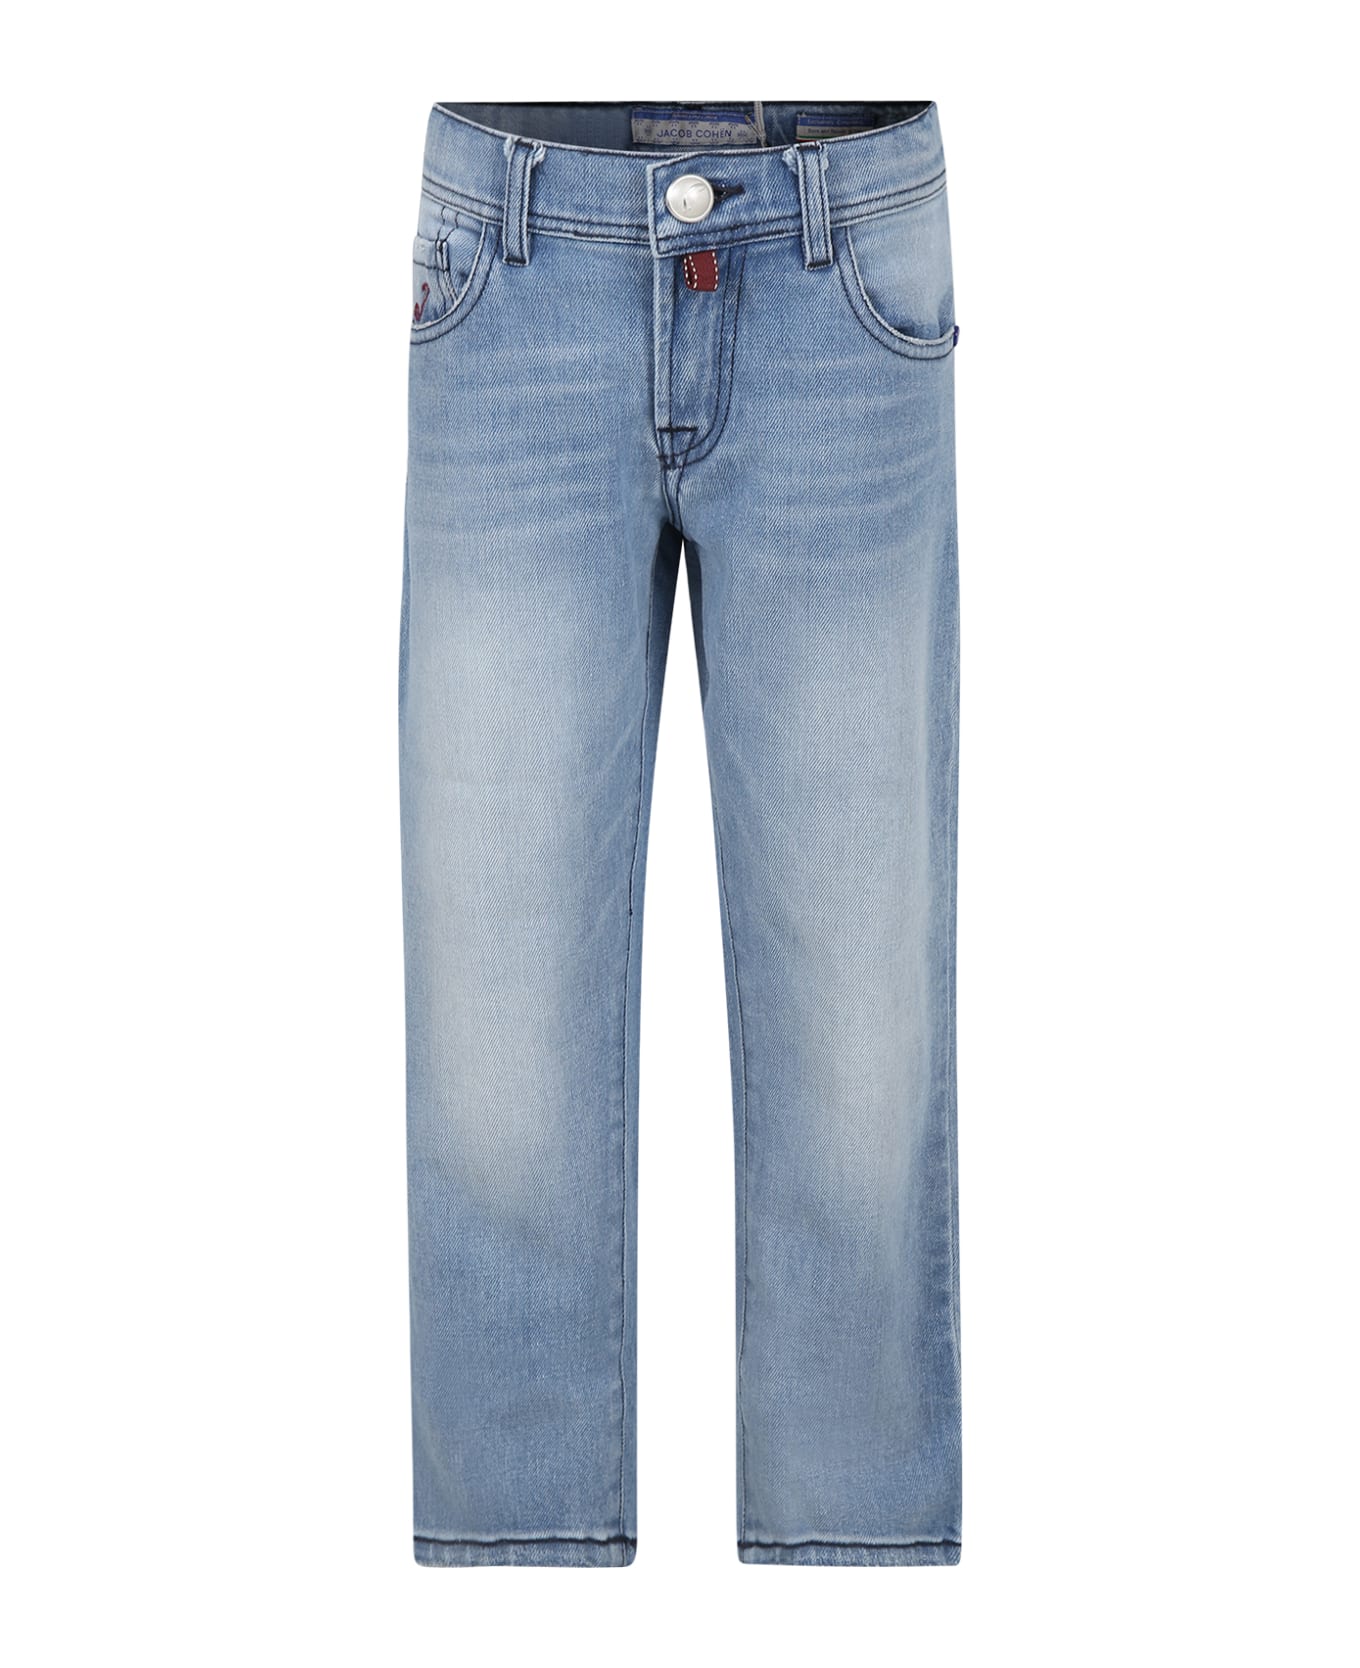 Jacob Cohen Blue Jeans For Boy With Logo - Denim